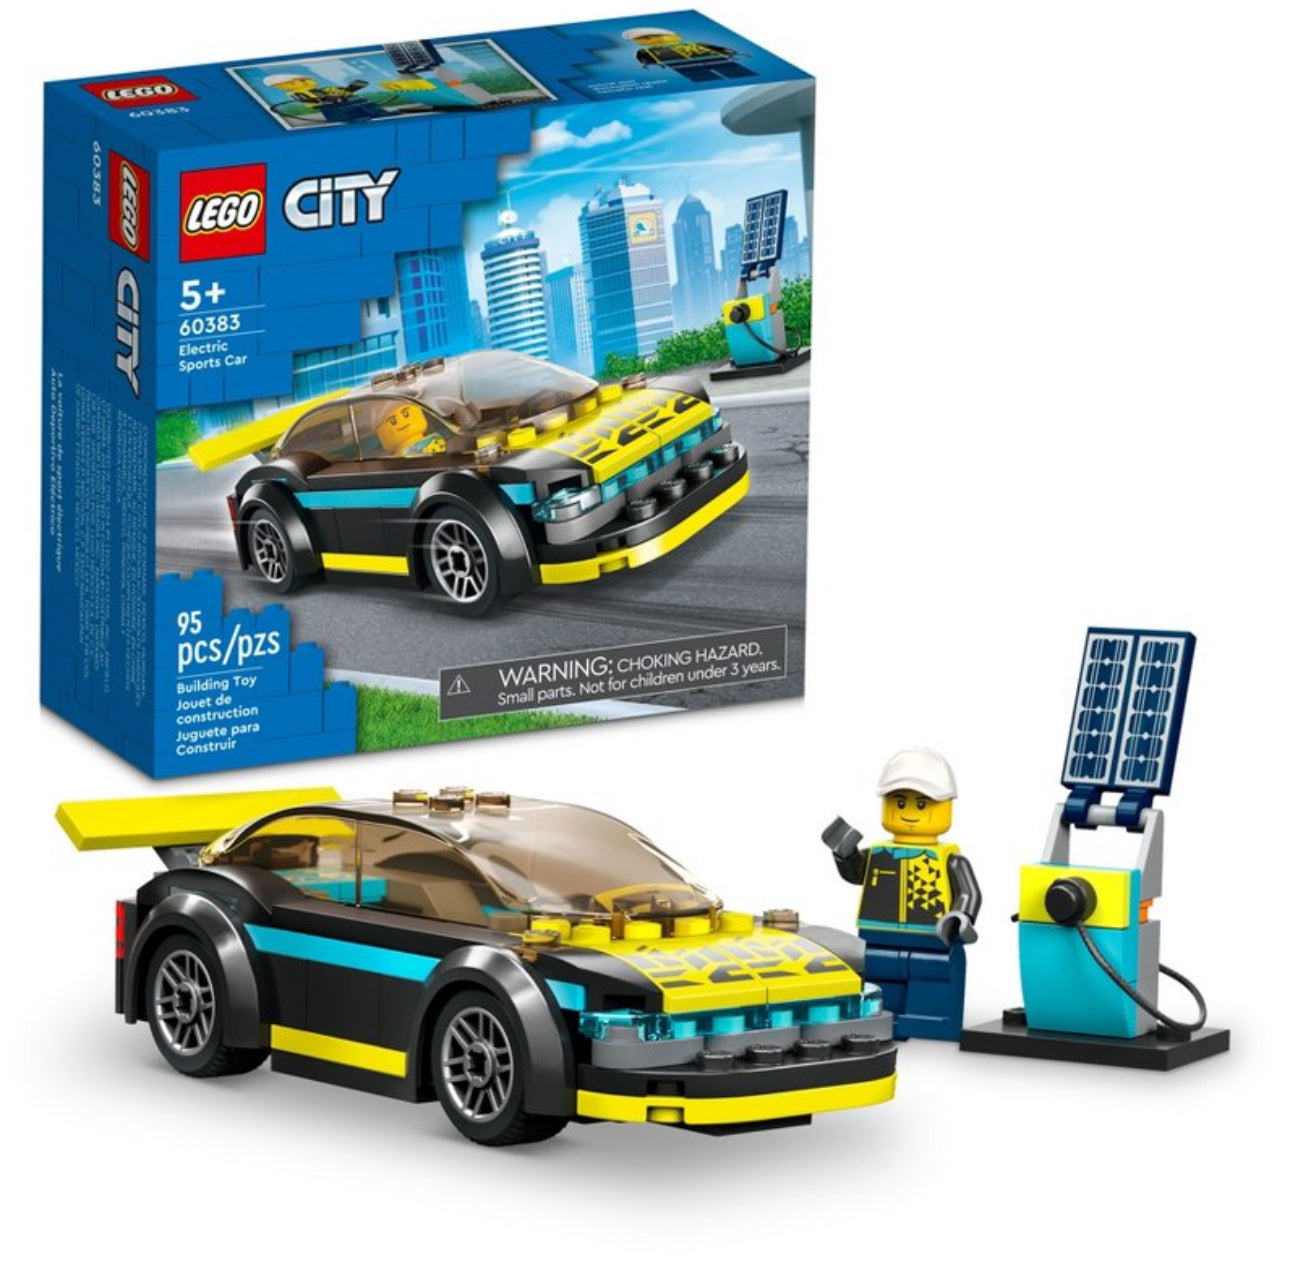 Lego City Electric Sports Car - 60383